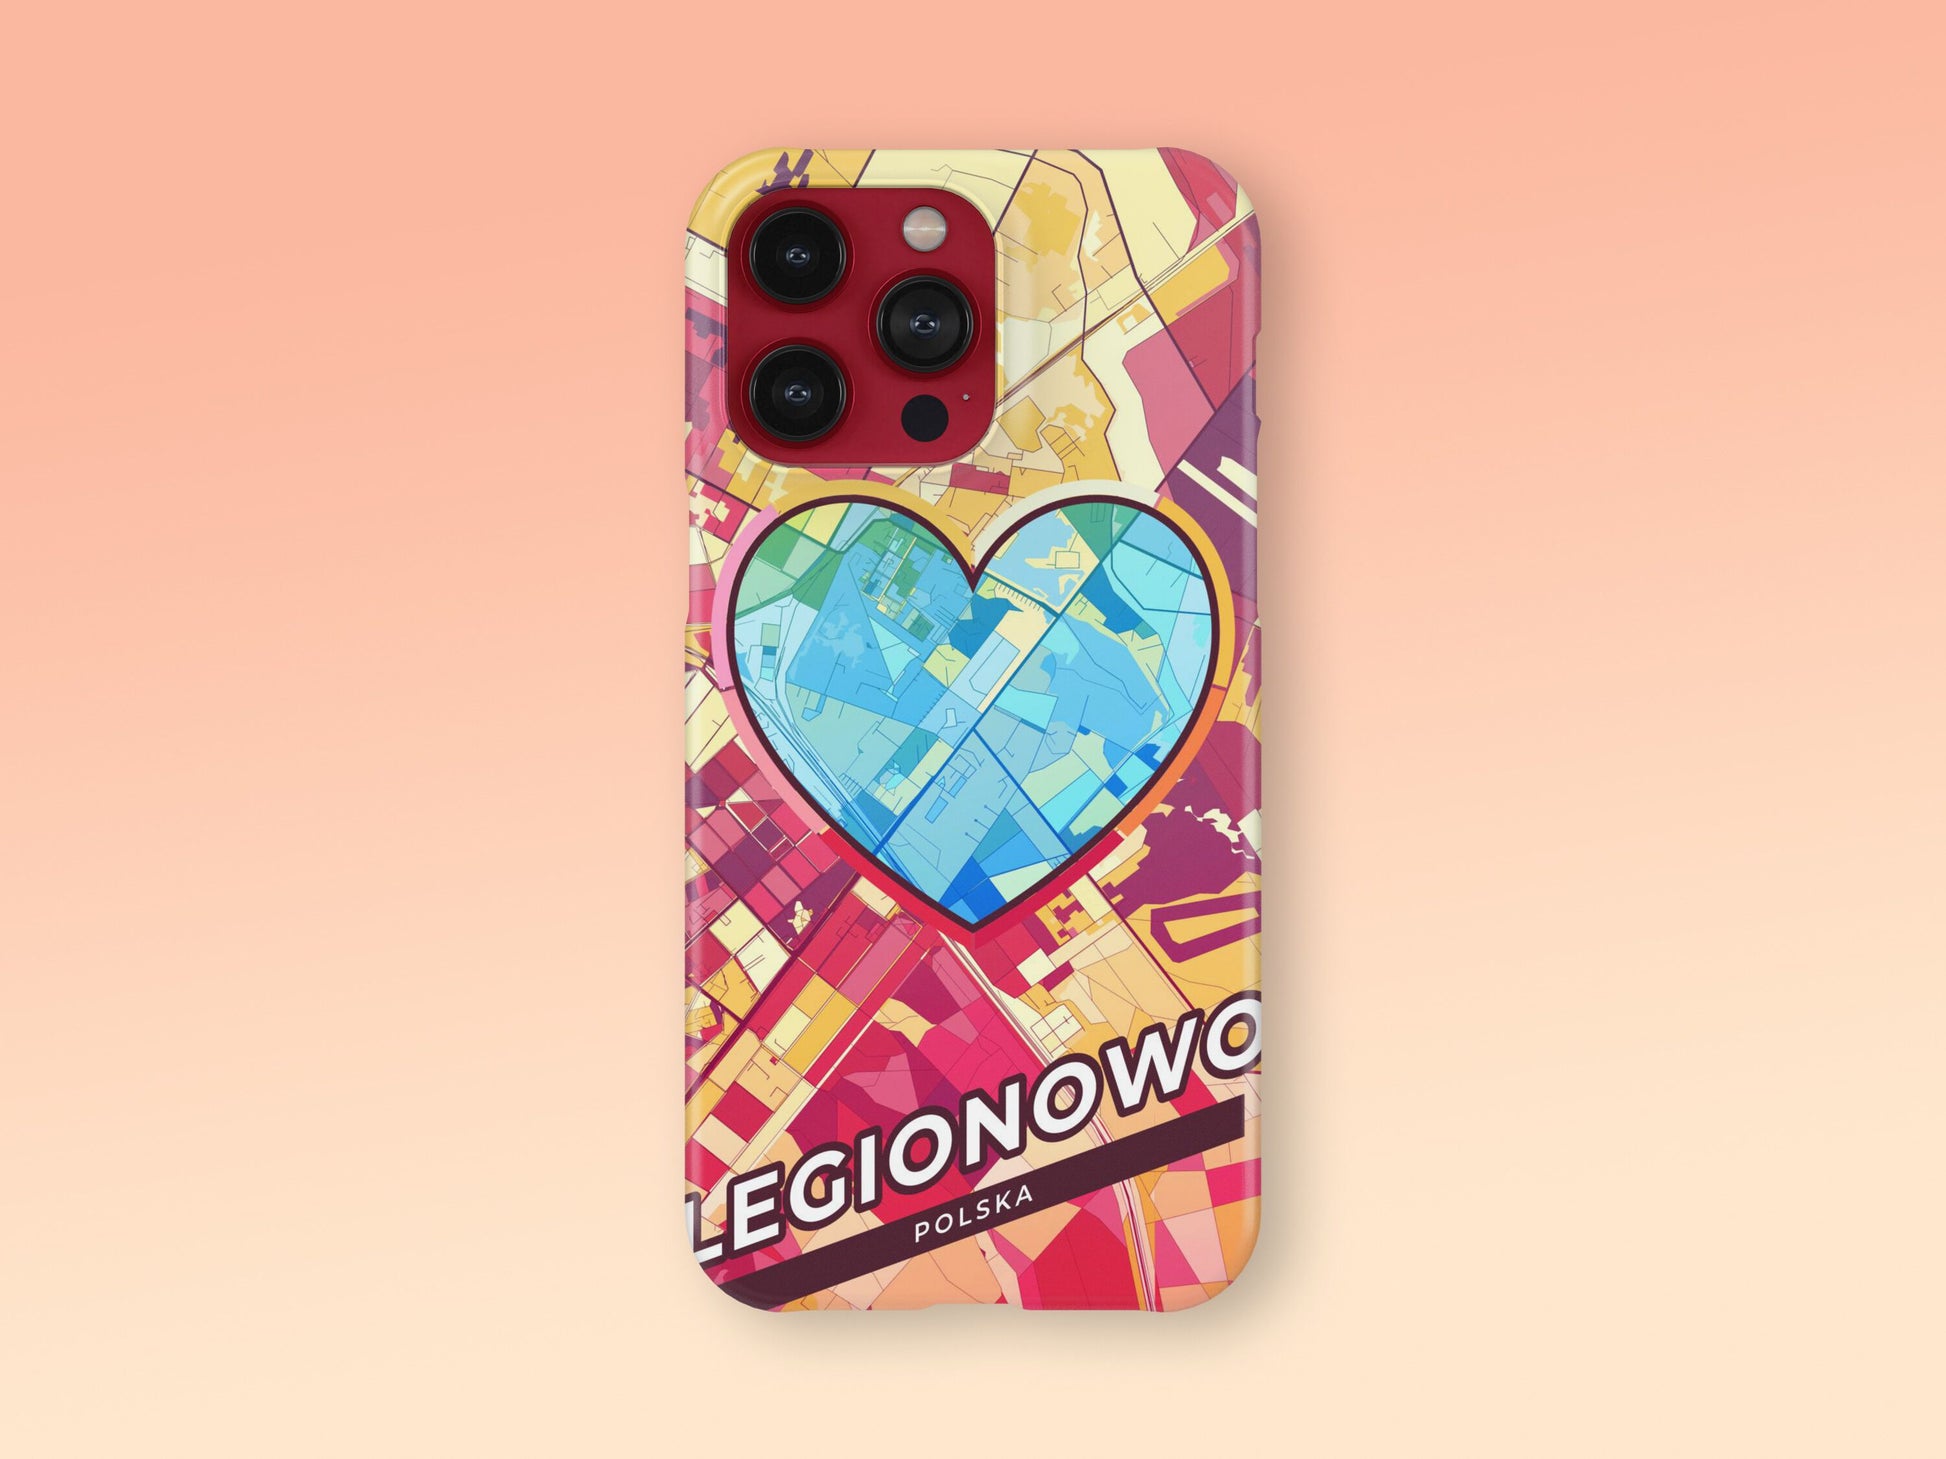 Legionowo Poland slim phone case with colorful icon. Birthday, wedding or housewarming gift. Couple match cases. 2